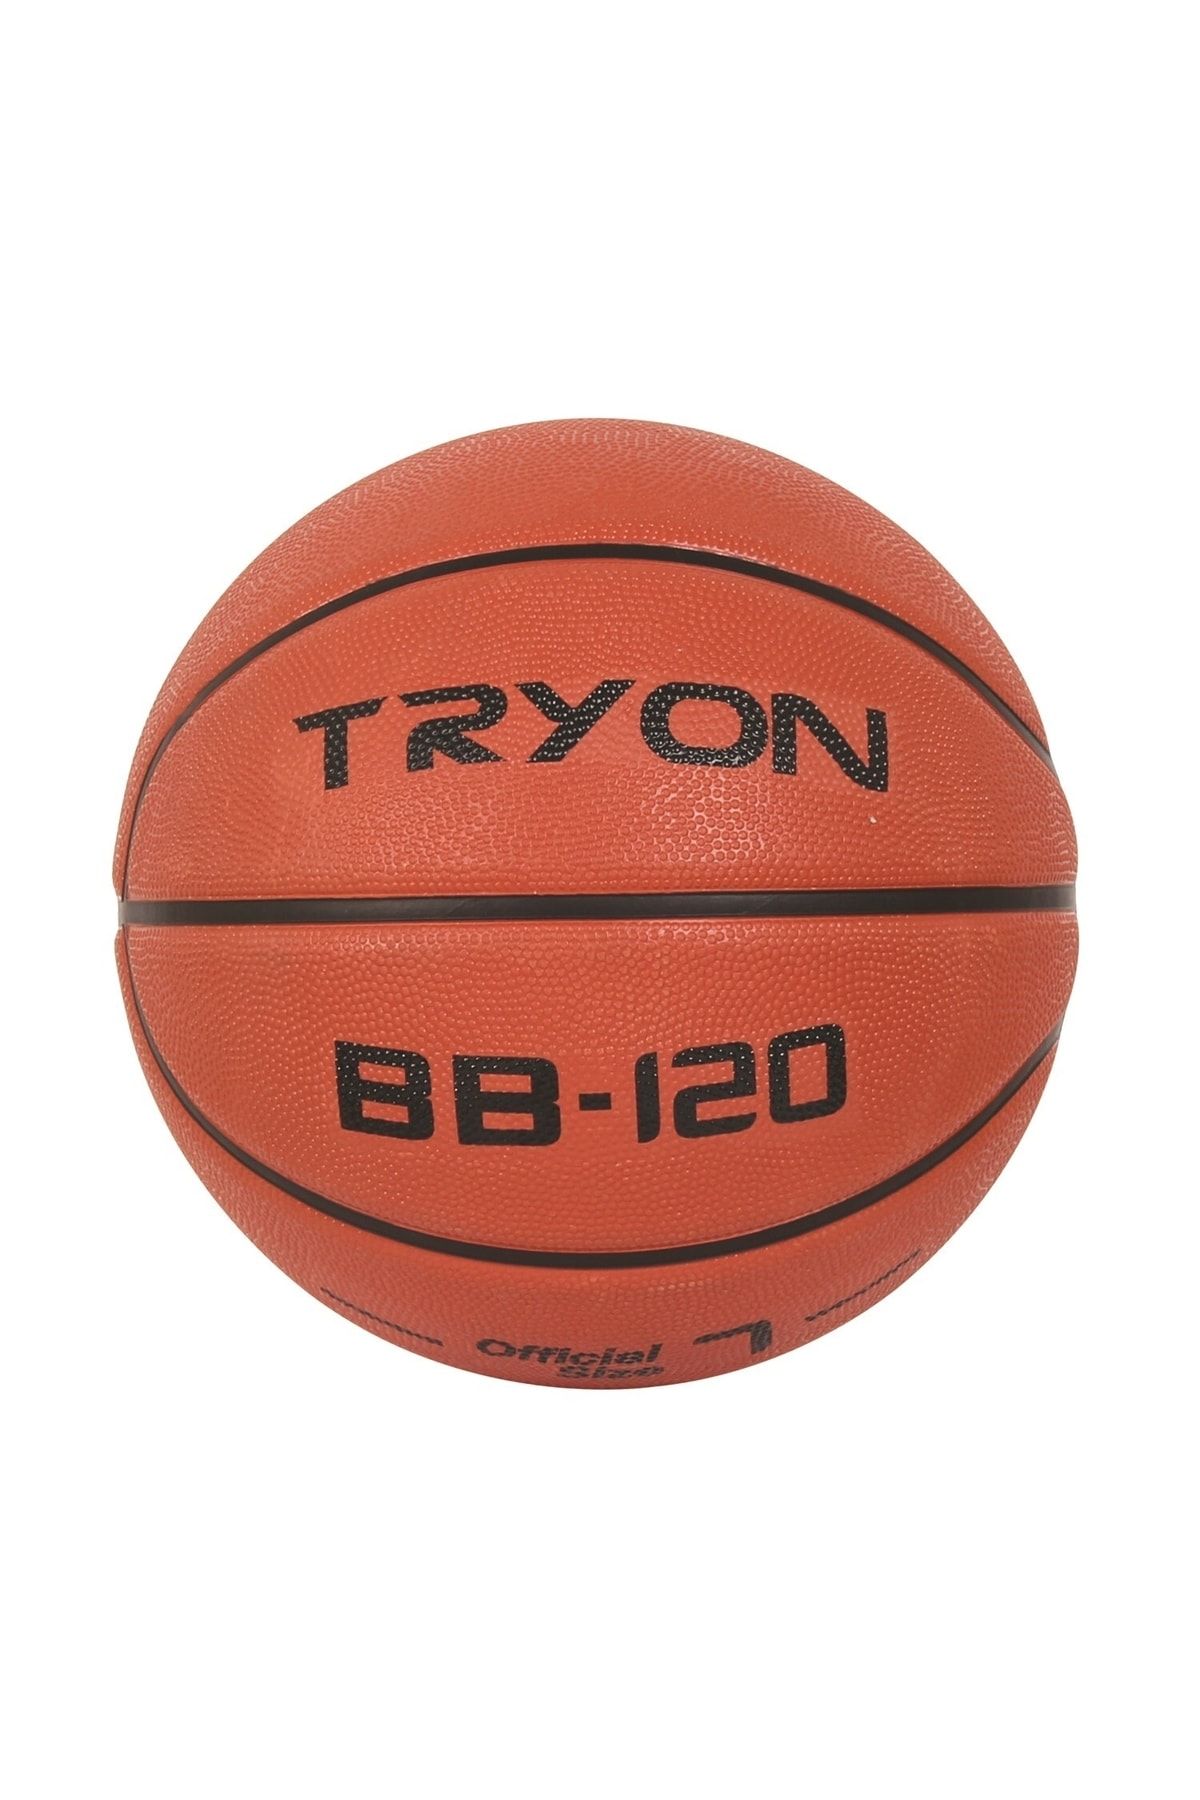 uhlsport Basketbol Topu Bb-120 7 No Top